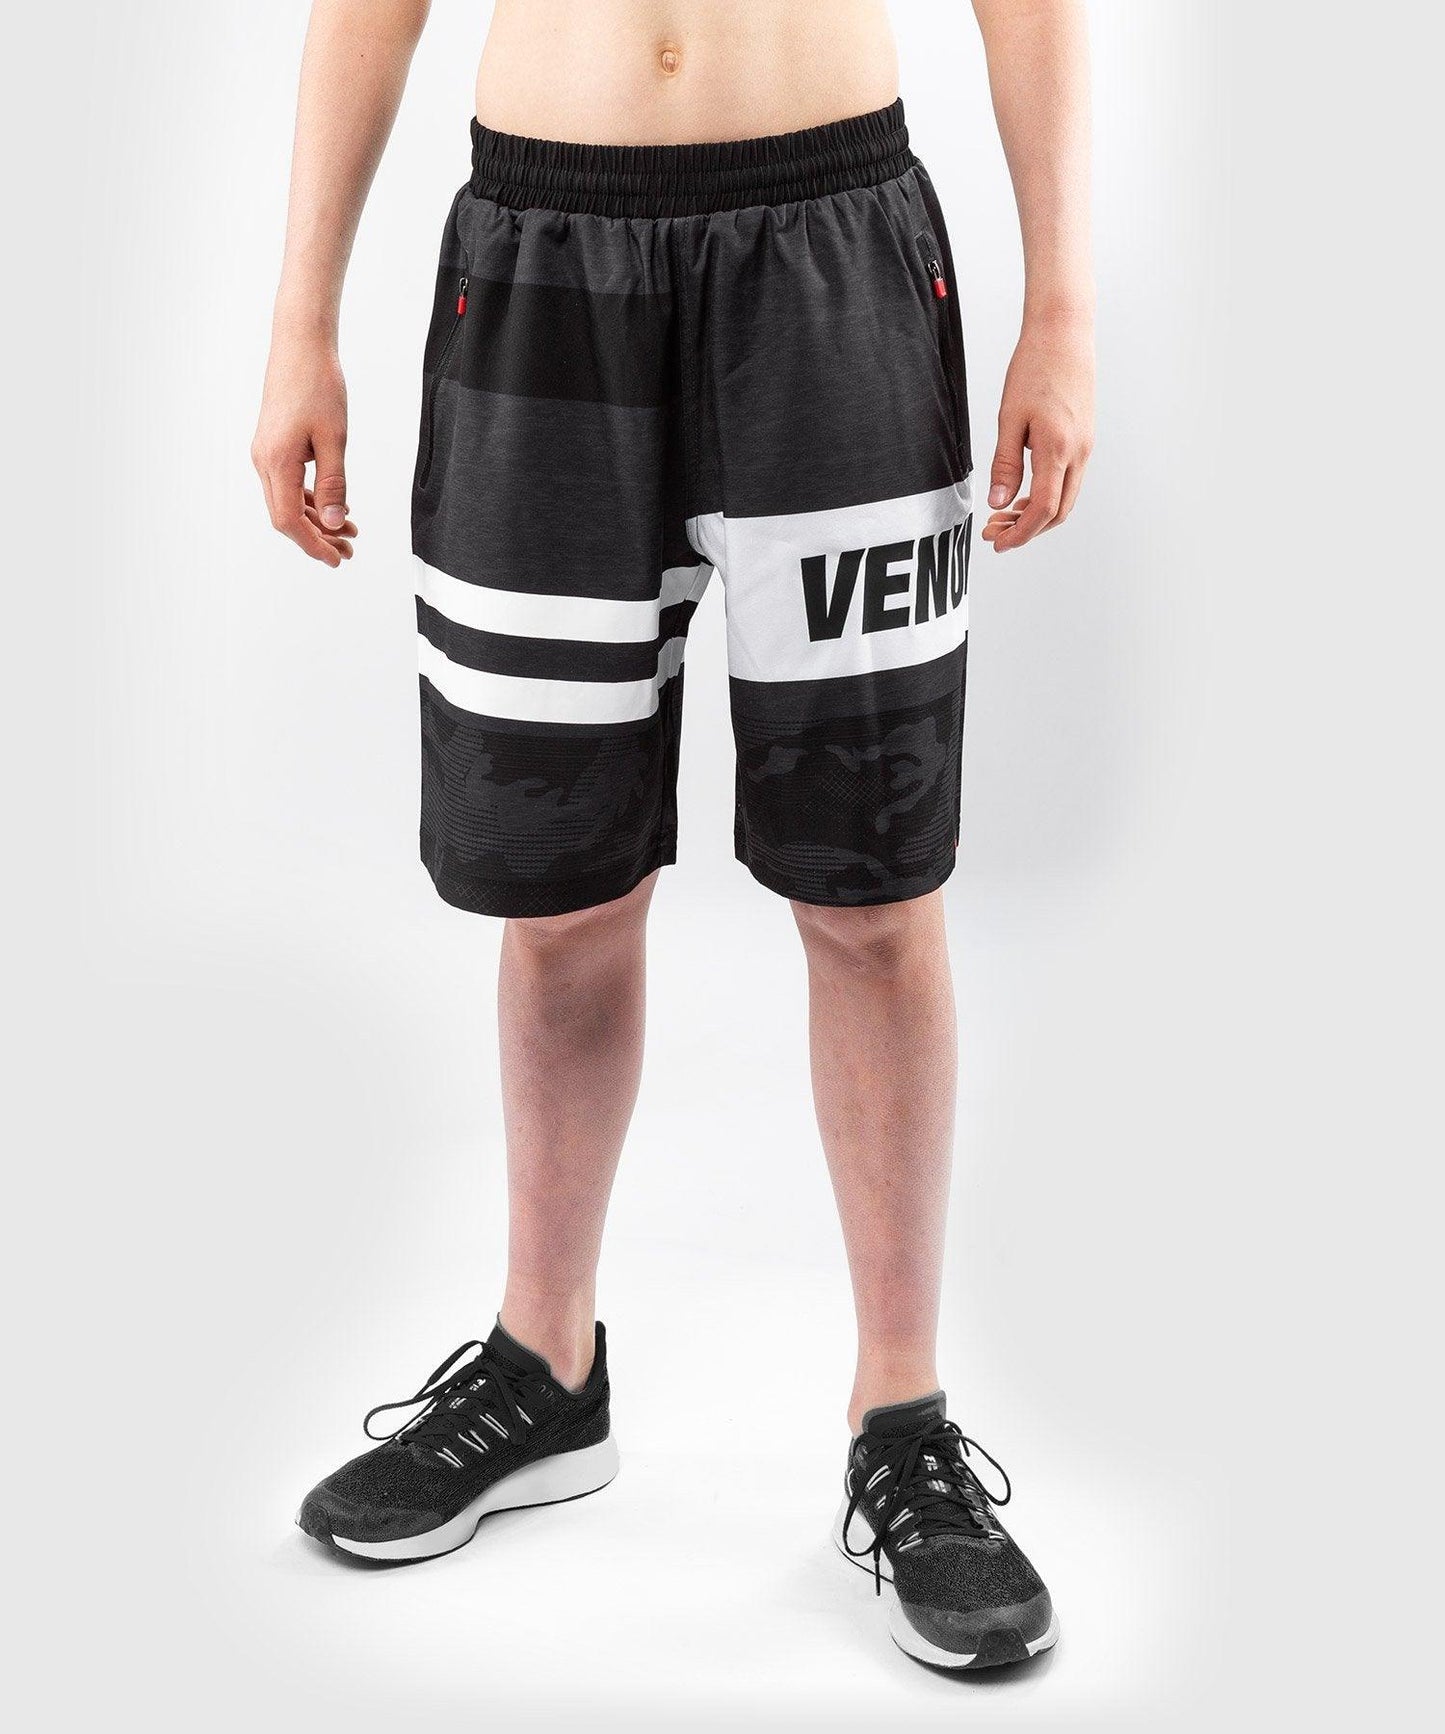 Venum Bandit training shorts - for kids - Black/Grey